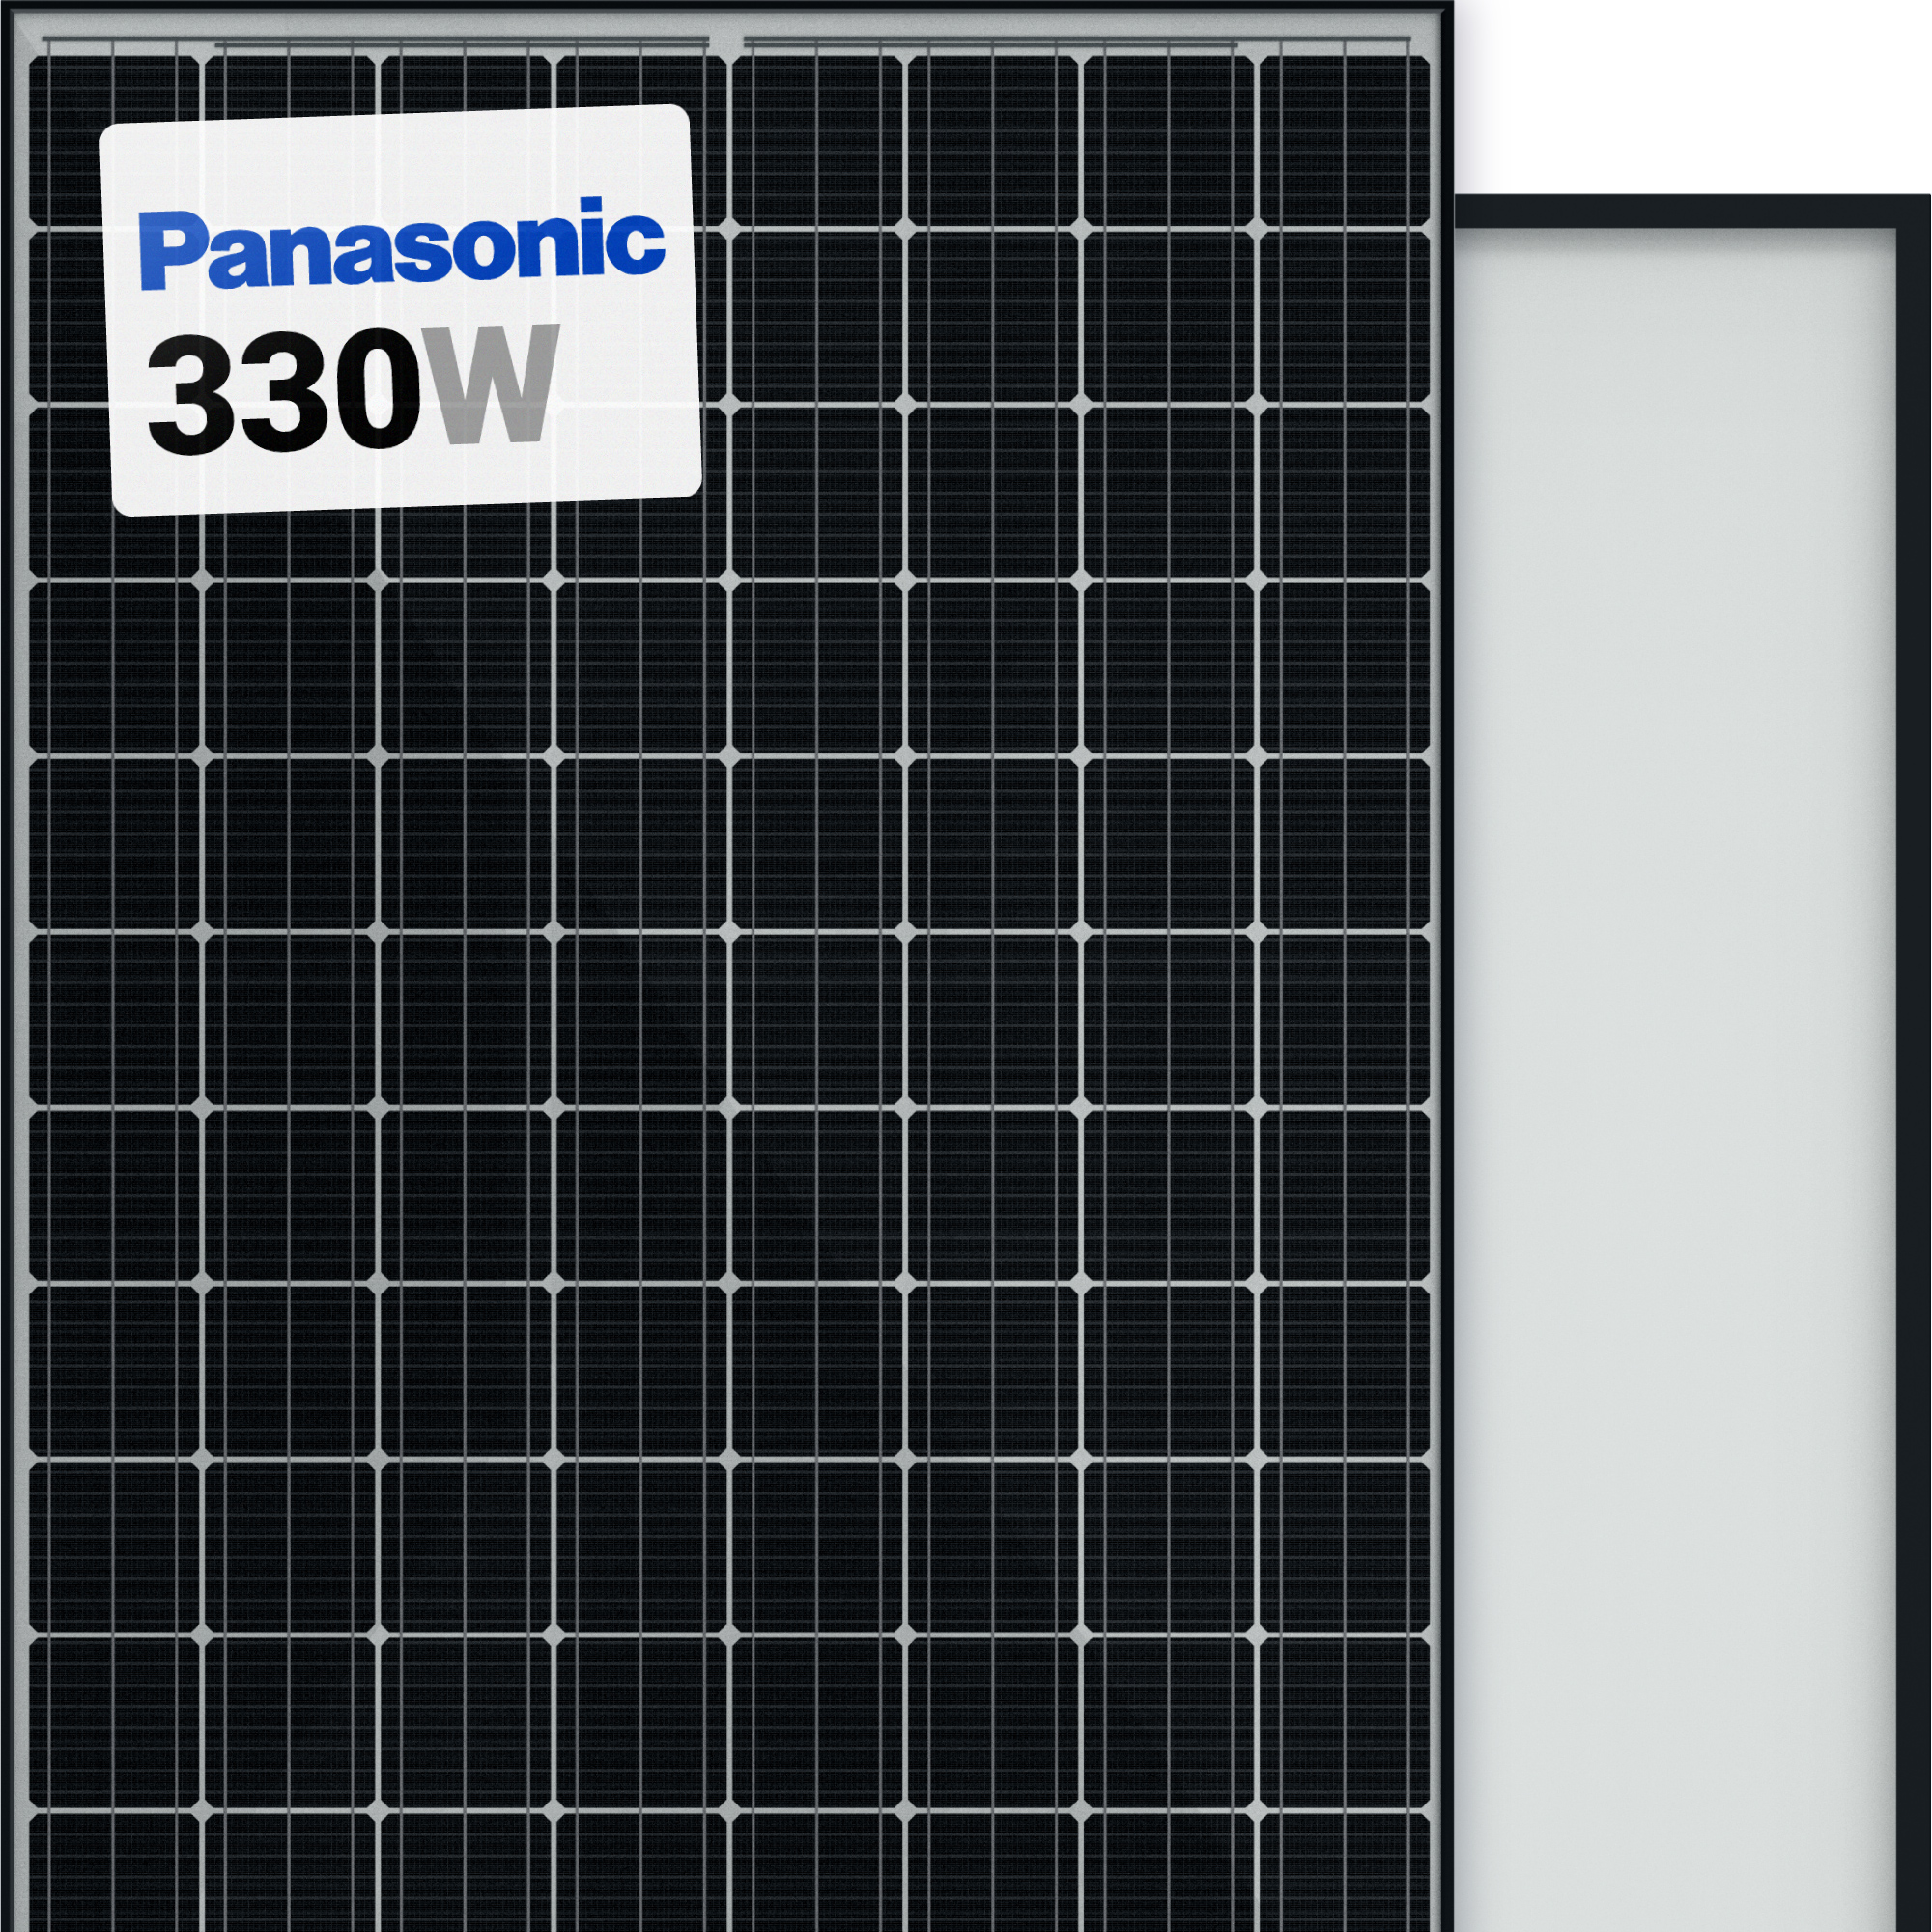 Panasonic Hit 330w Solar Panel 96 Cell Vbhn330sa17 Monocrystalline Black A1 Solar Store